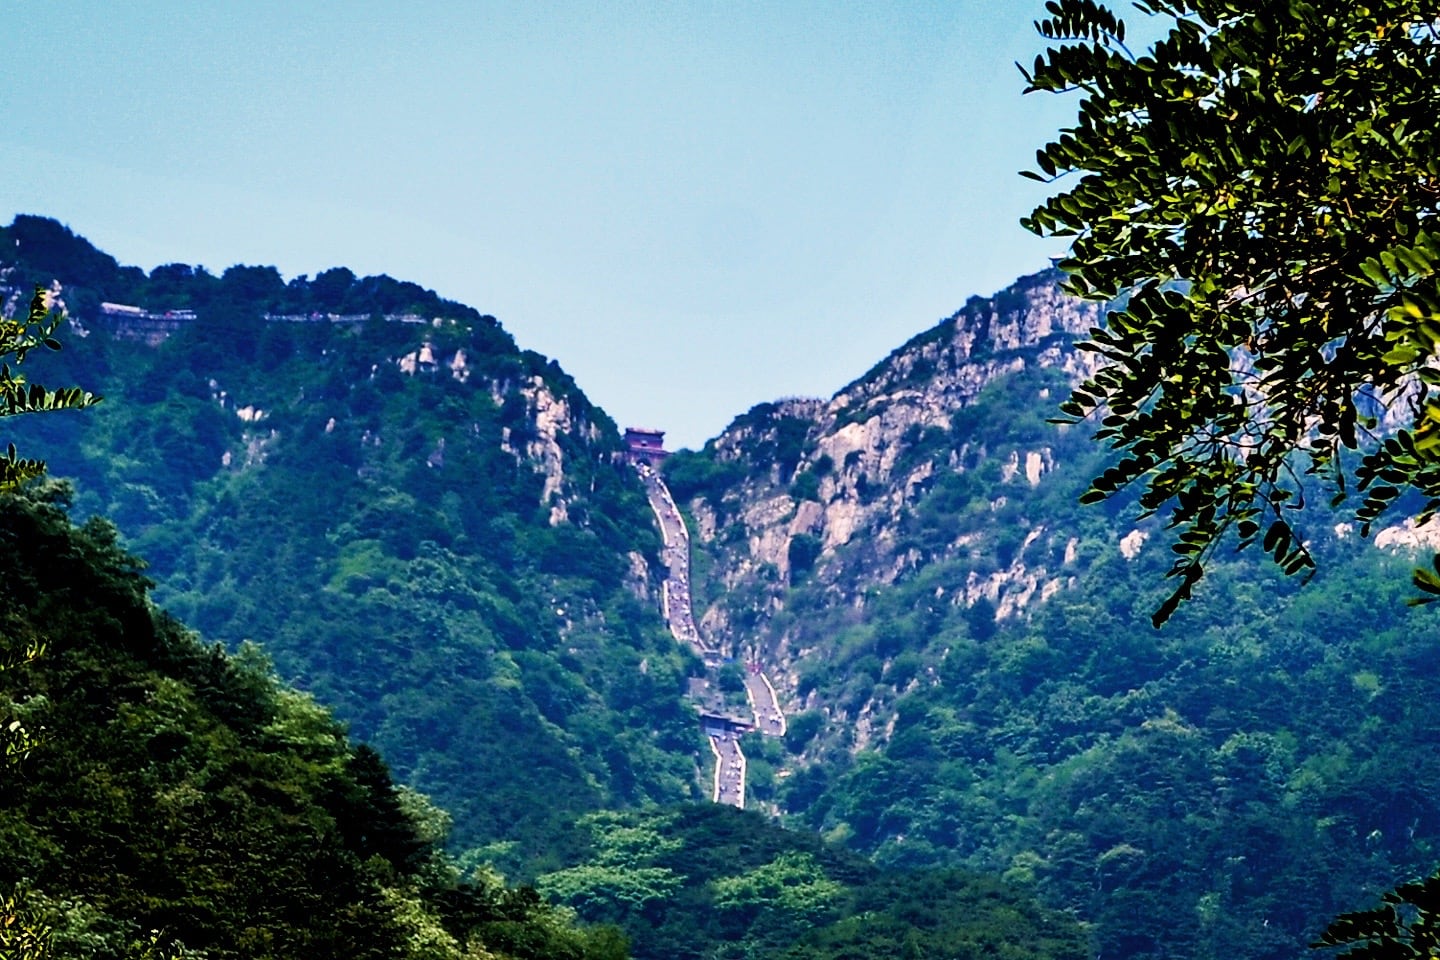 Mount Tai stairway up mountain